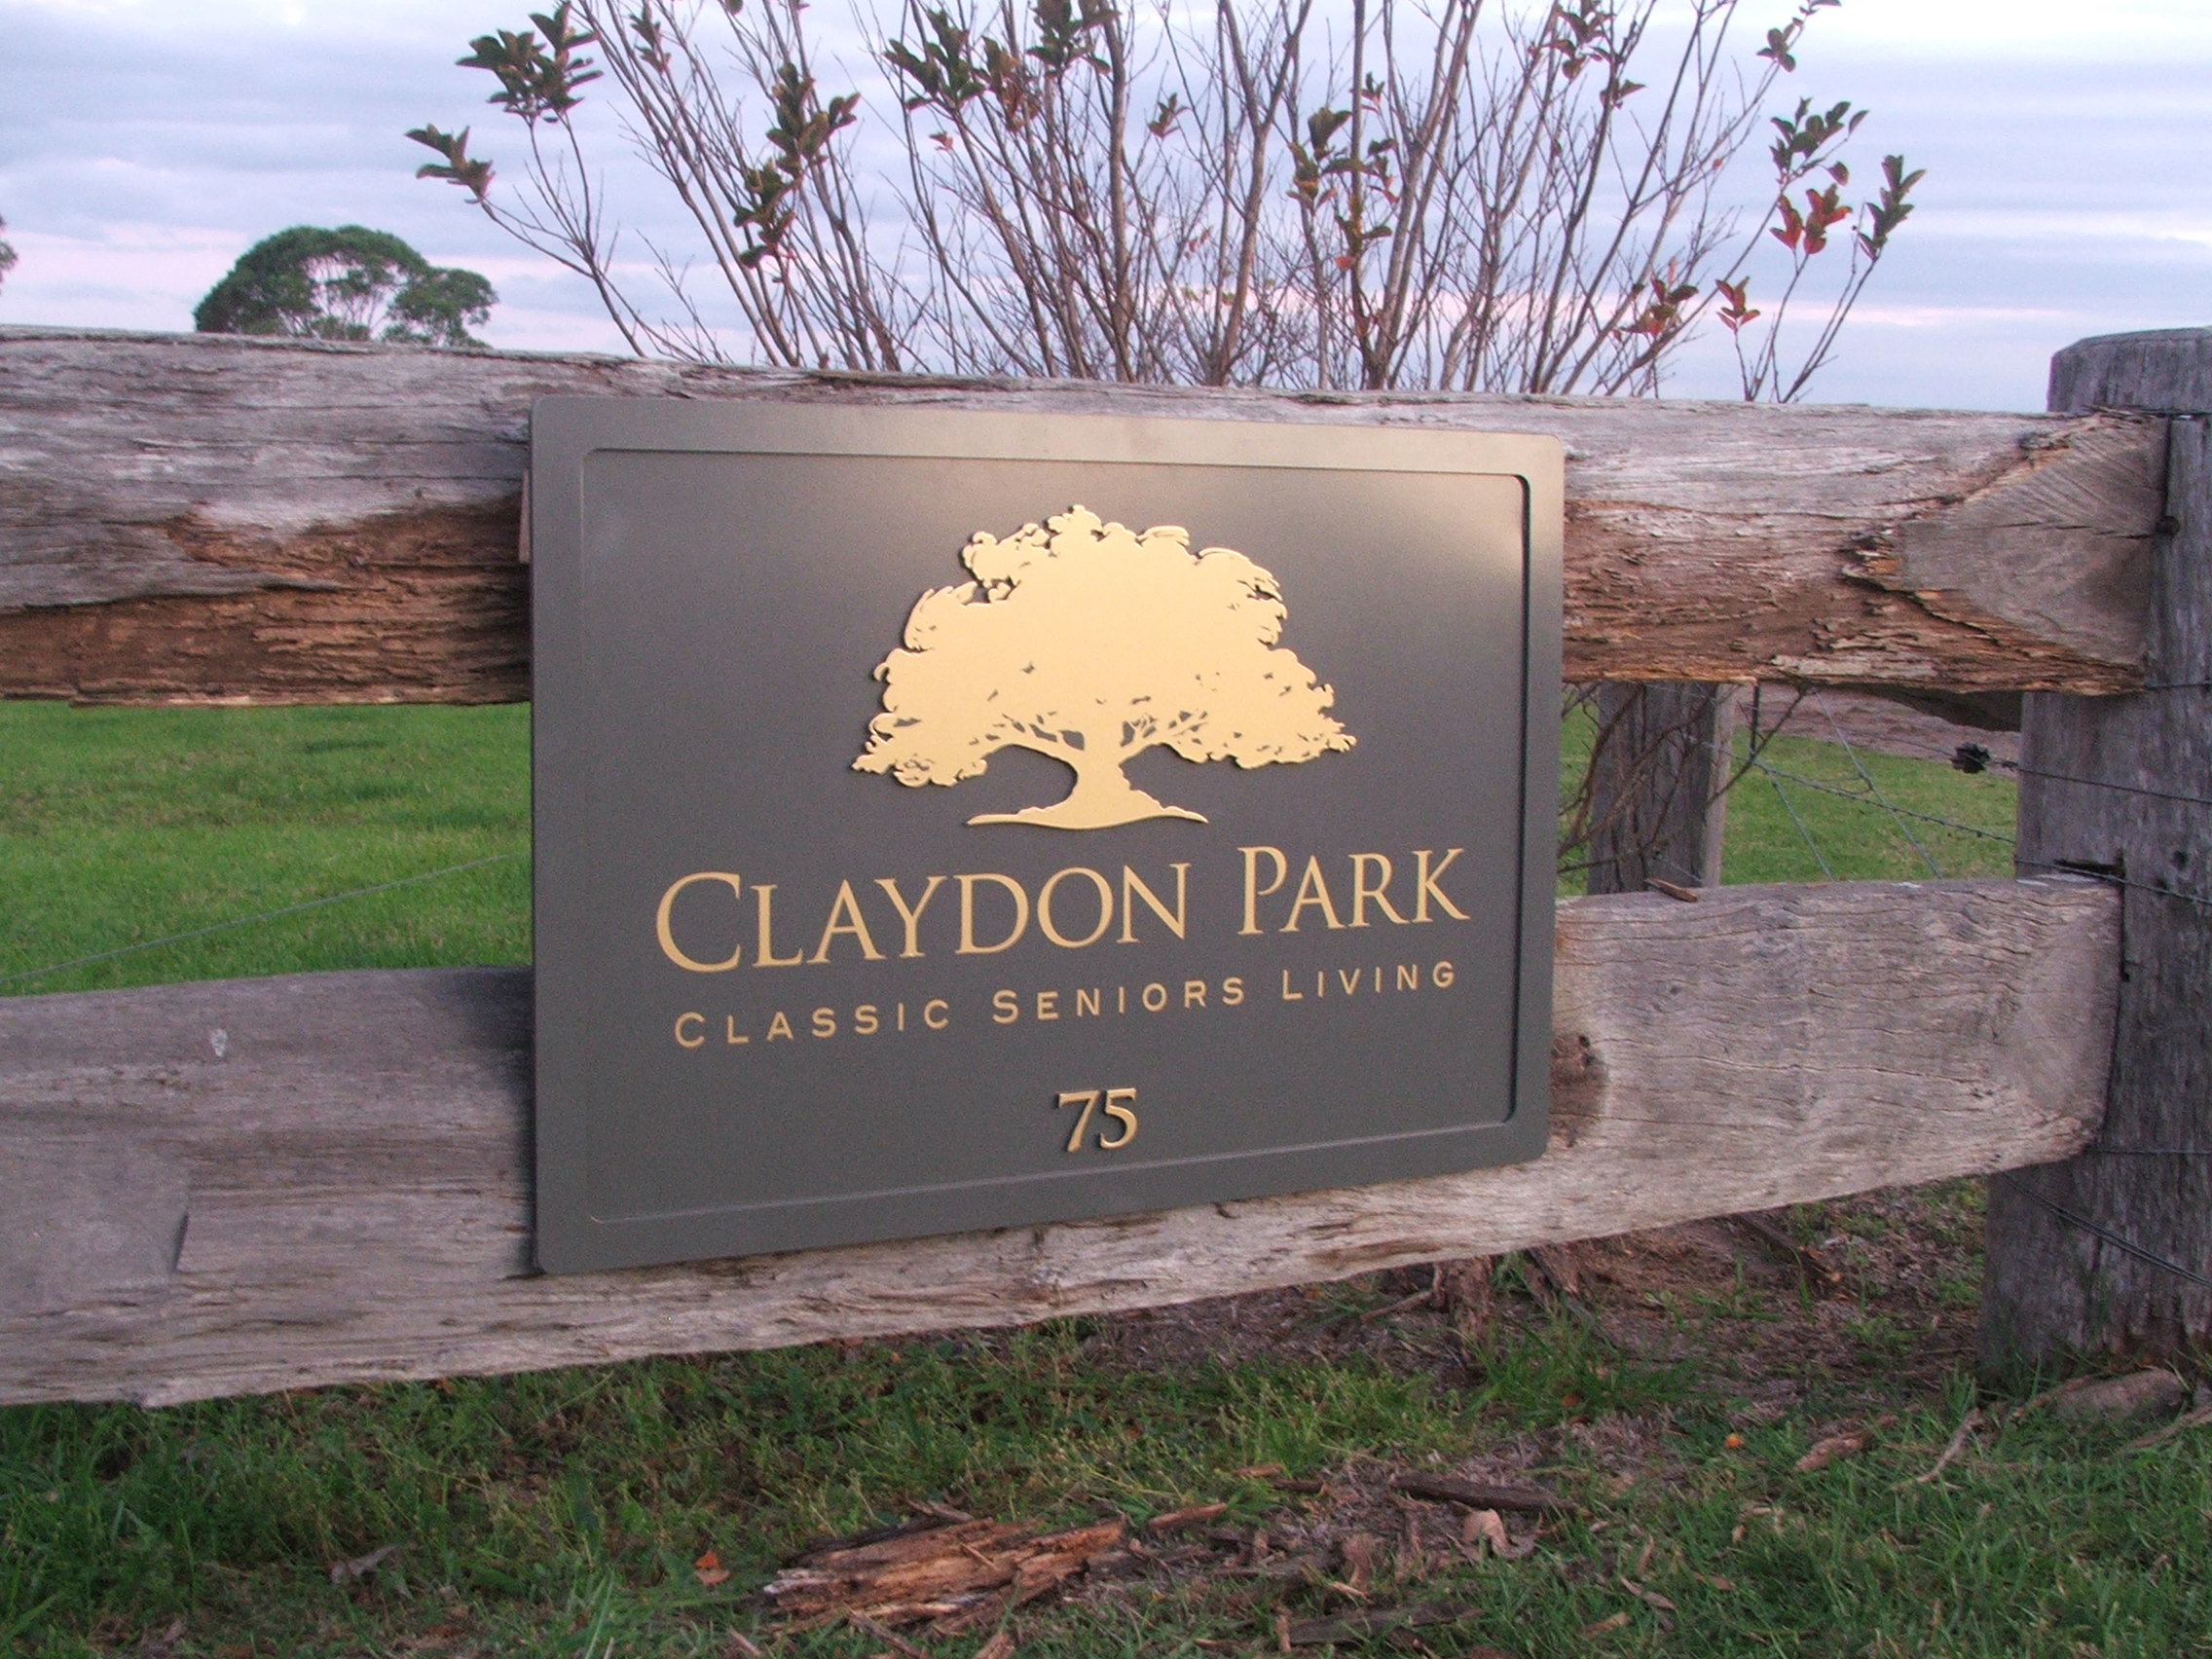 Signtext-Claydon Park